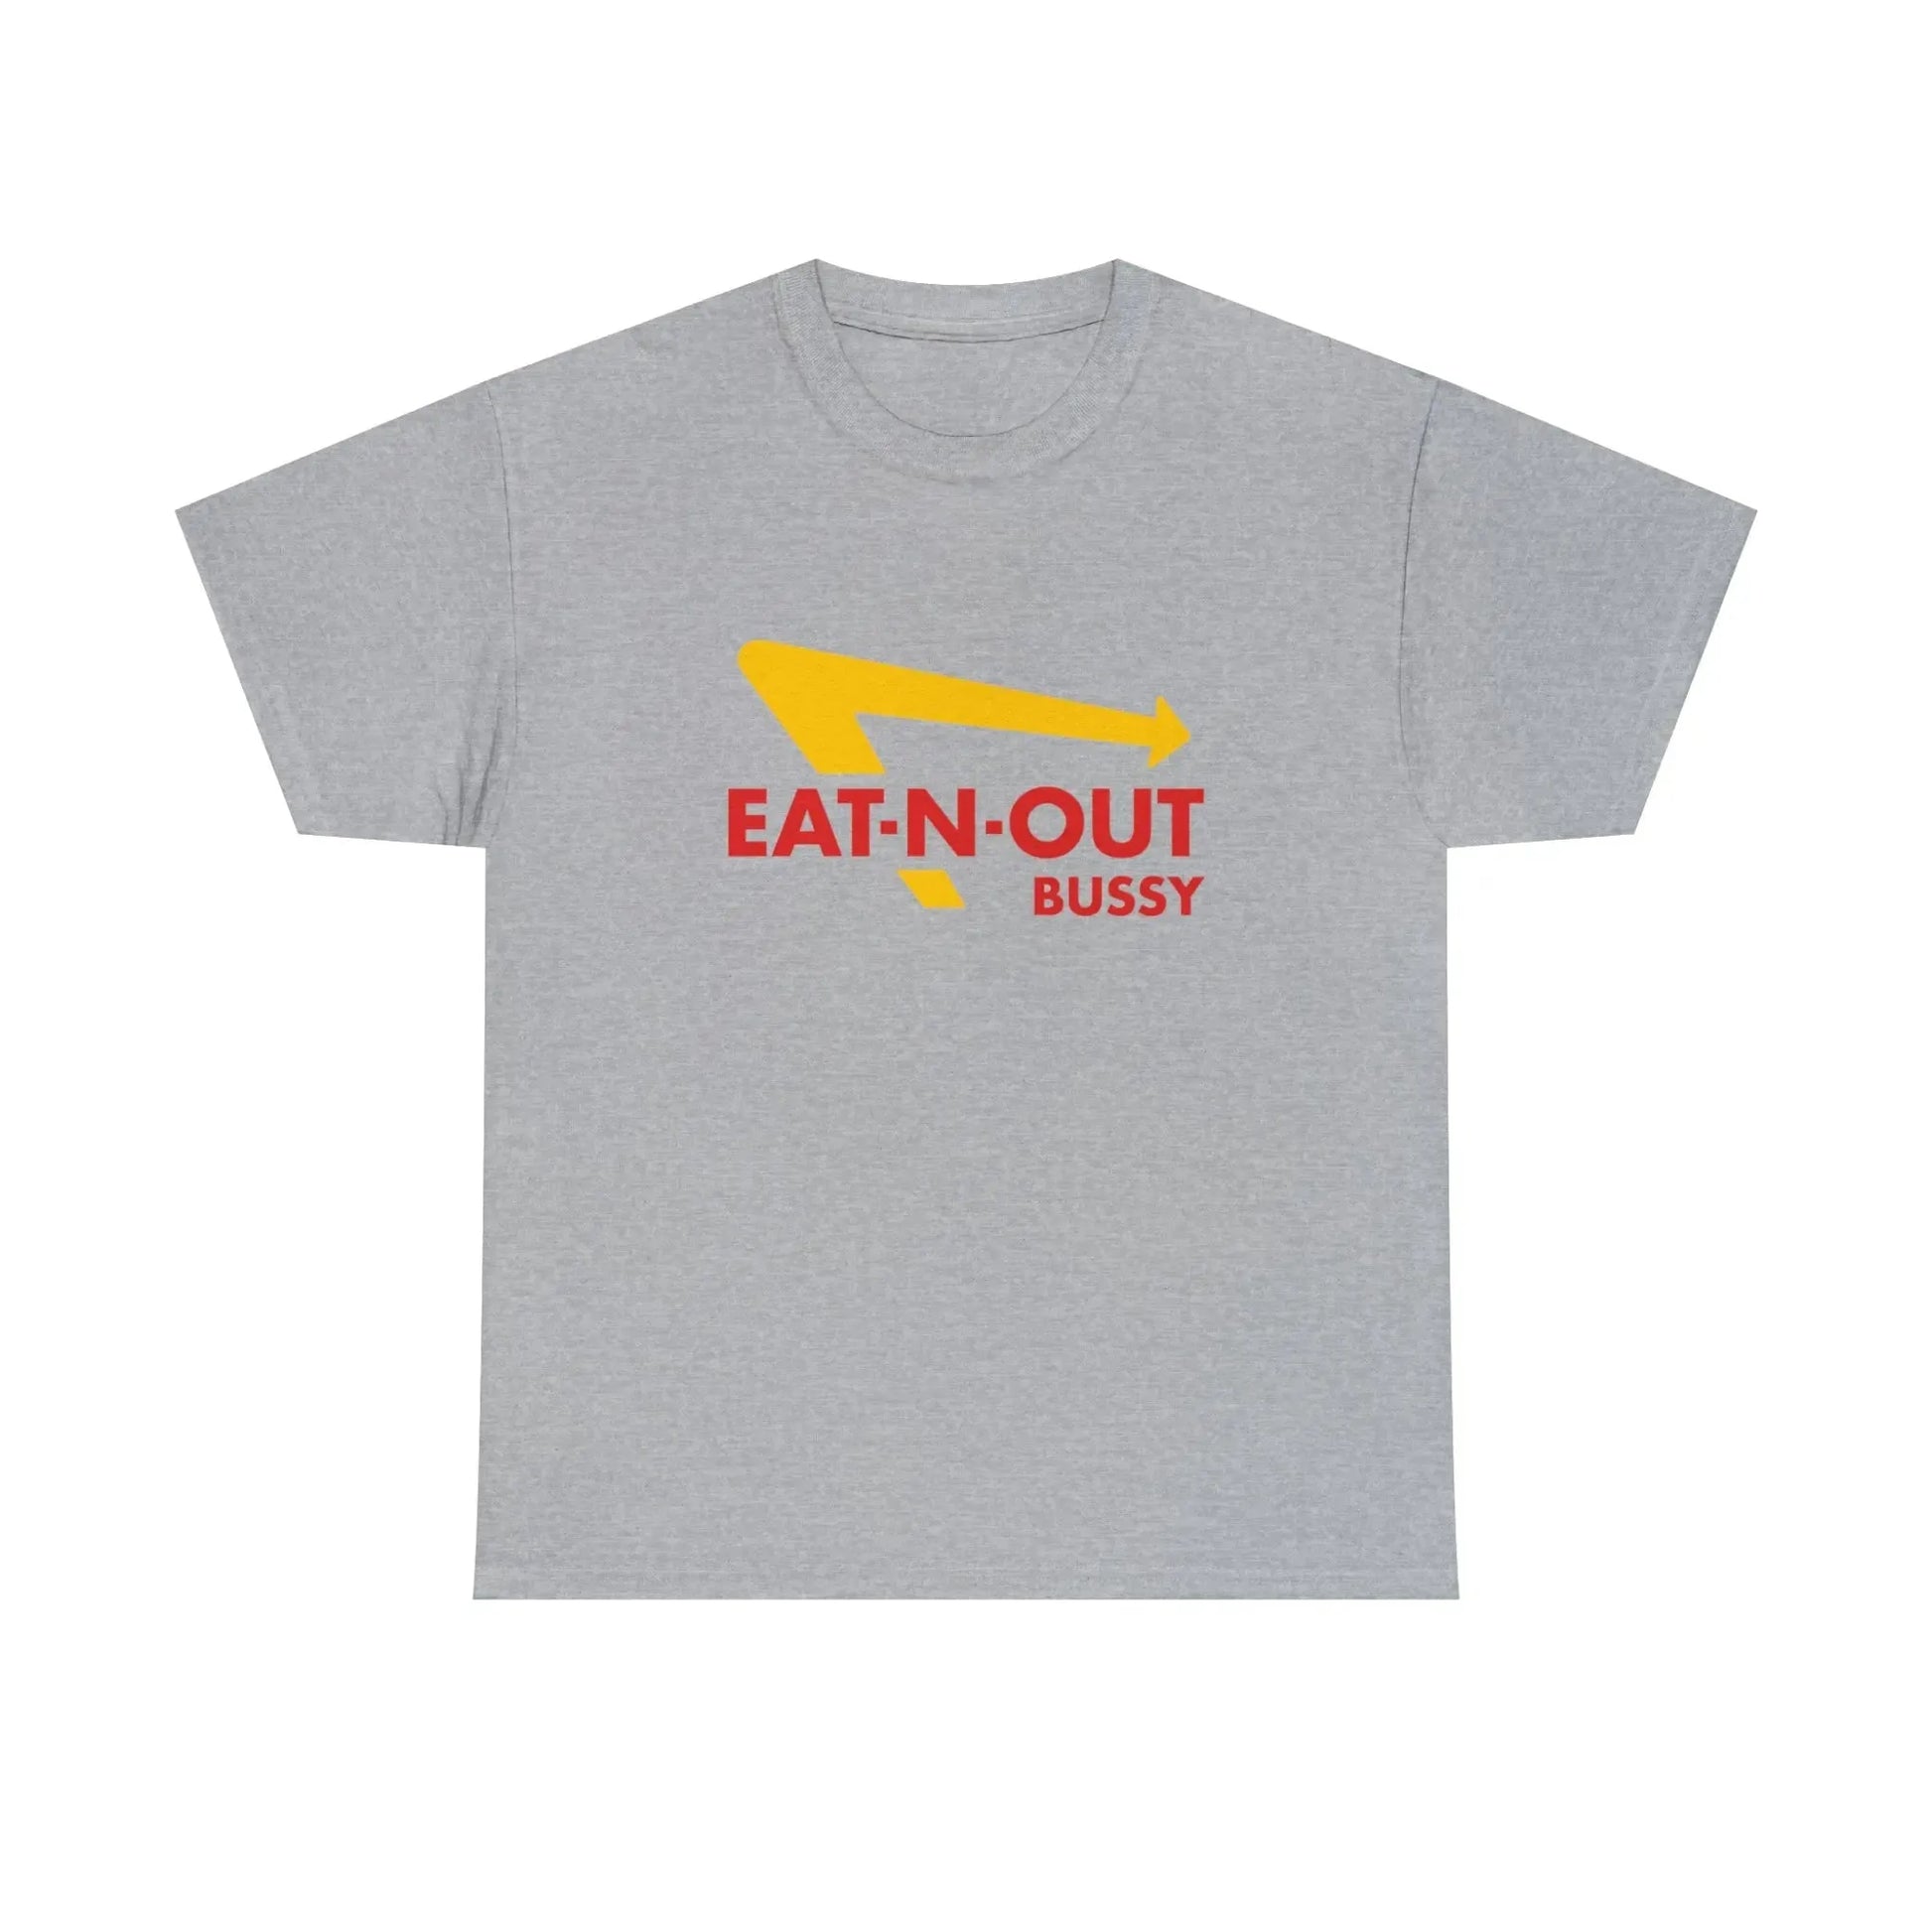 Eat-N-Out Bussy T-Shirt - Failure International failureinternational.com store brand tiktok instagram